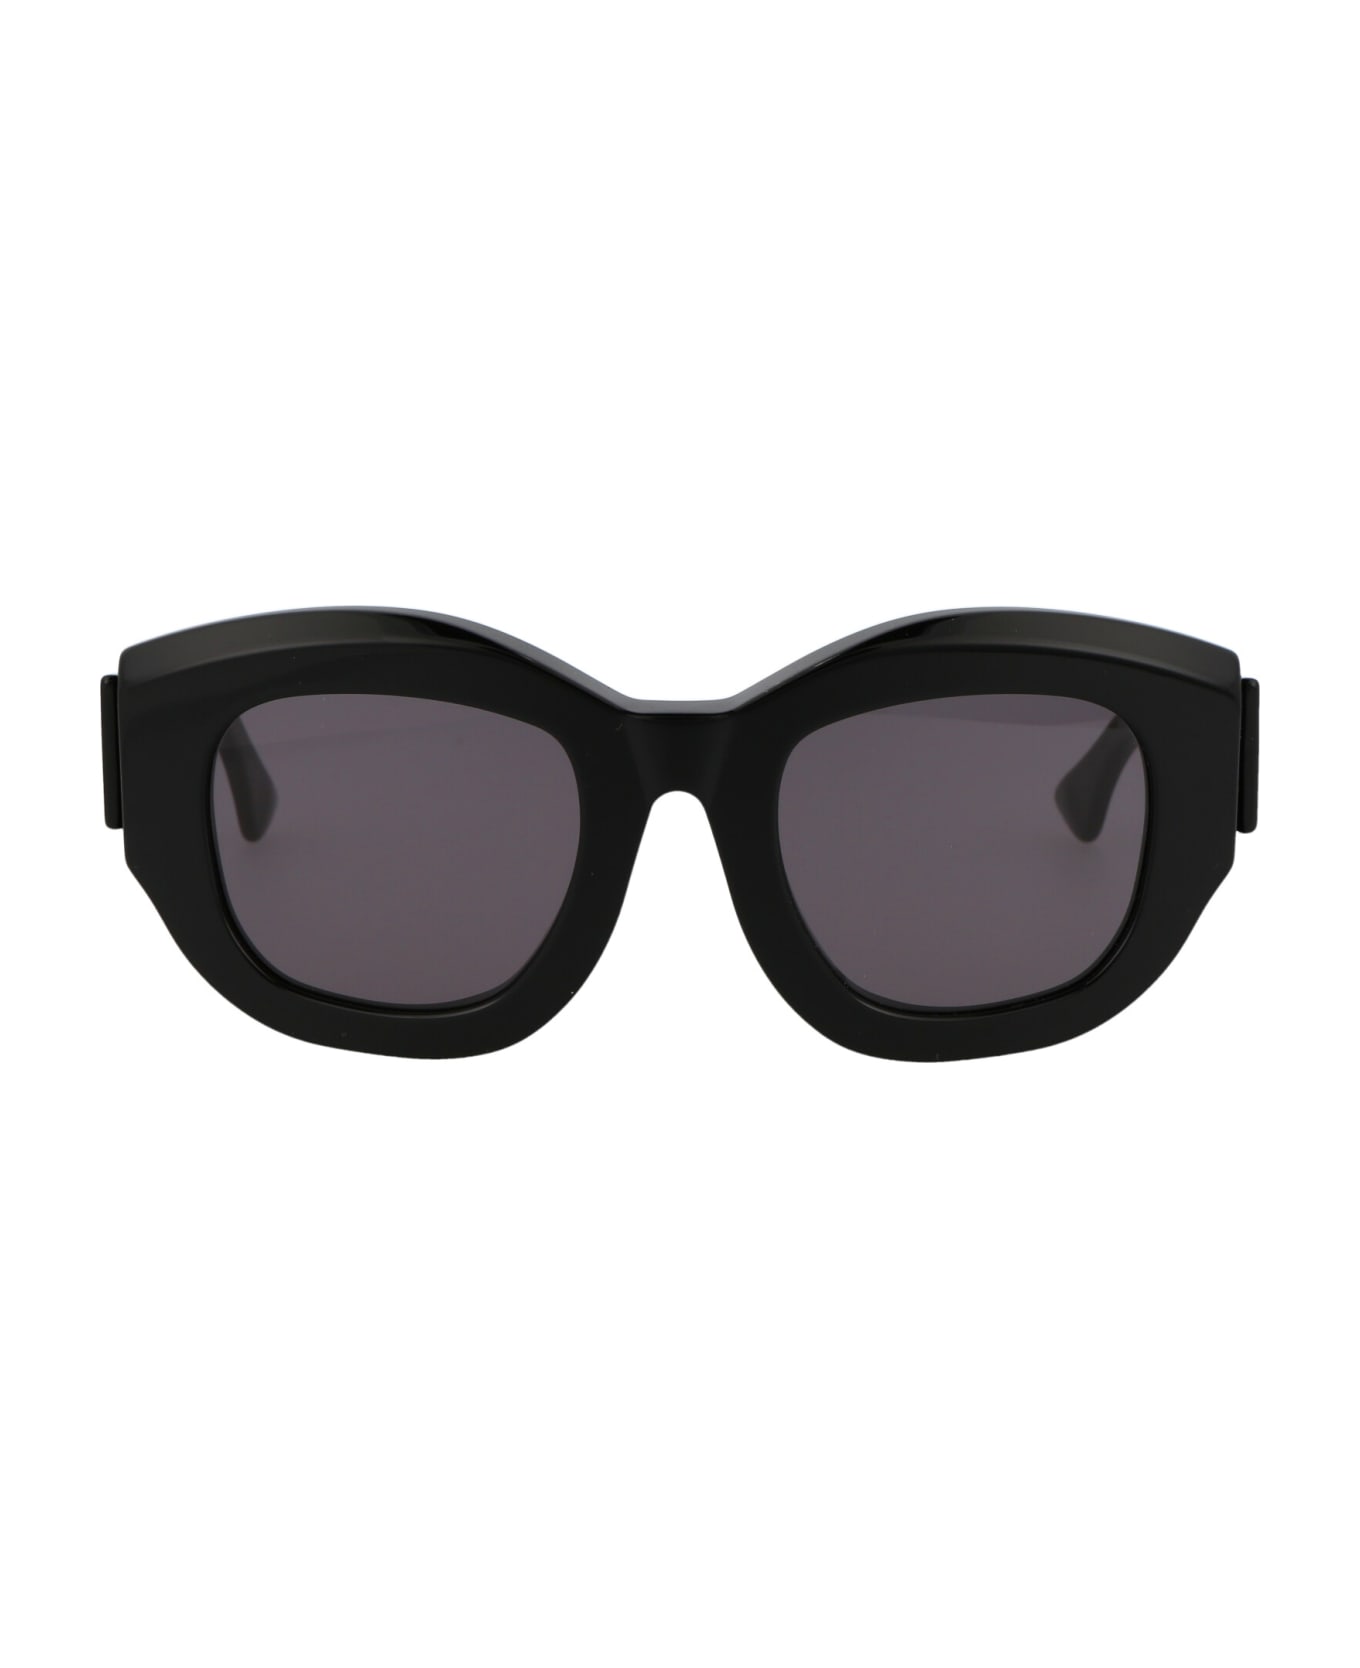 Kuboraum Maske B2 Sunglasses - BS 2grey